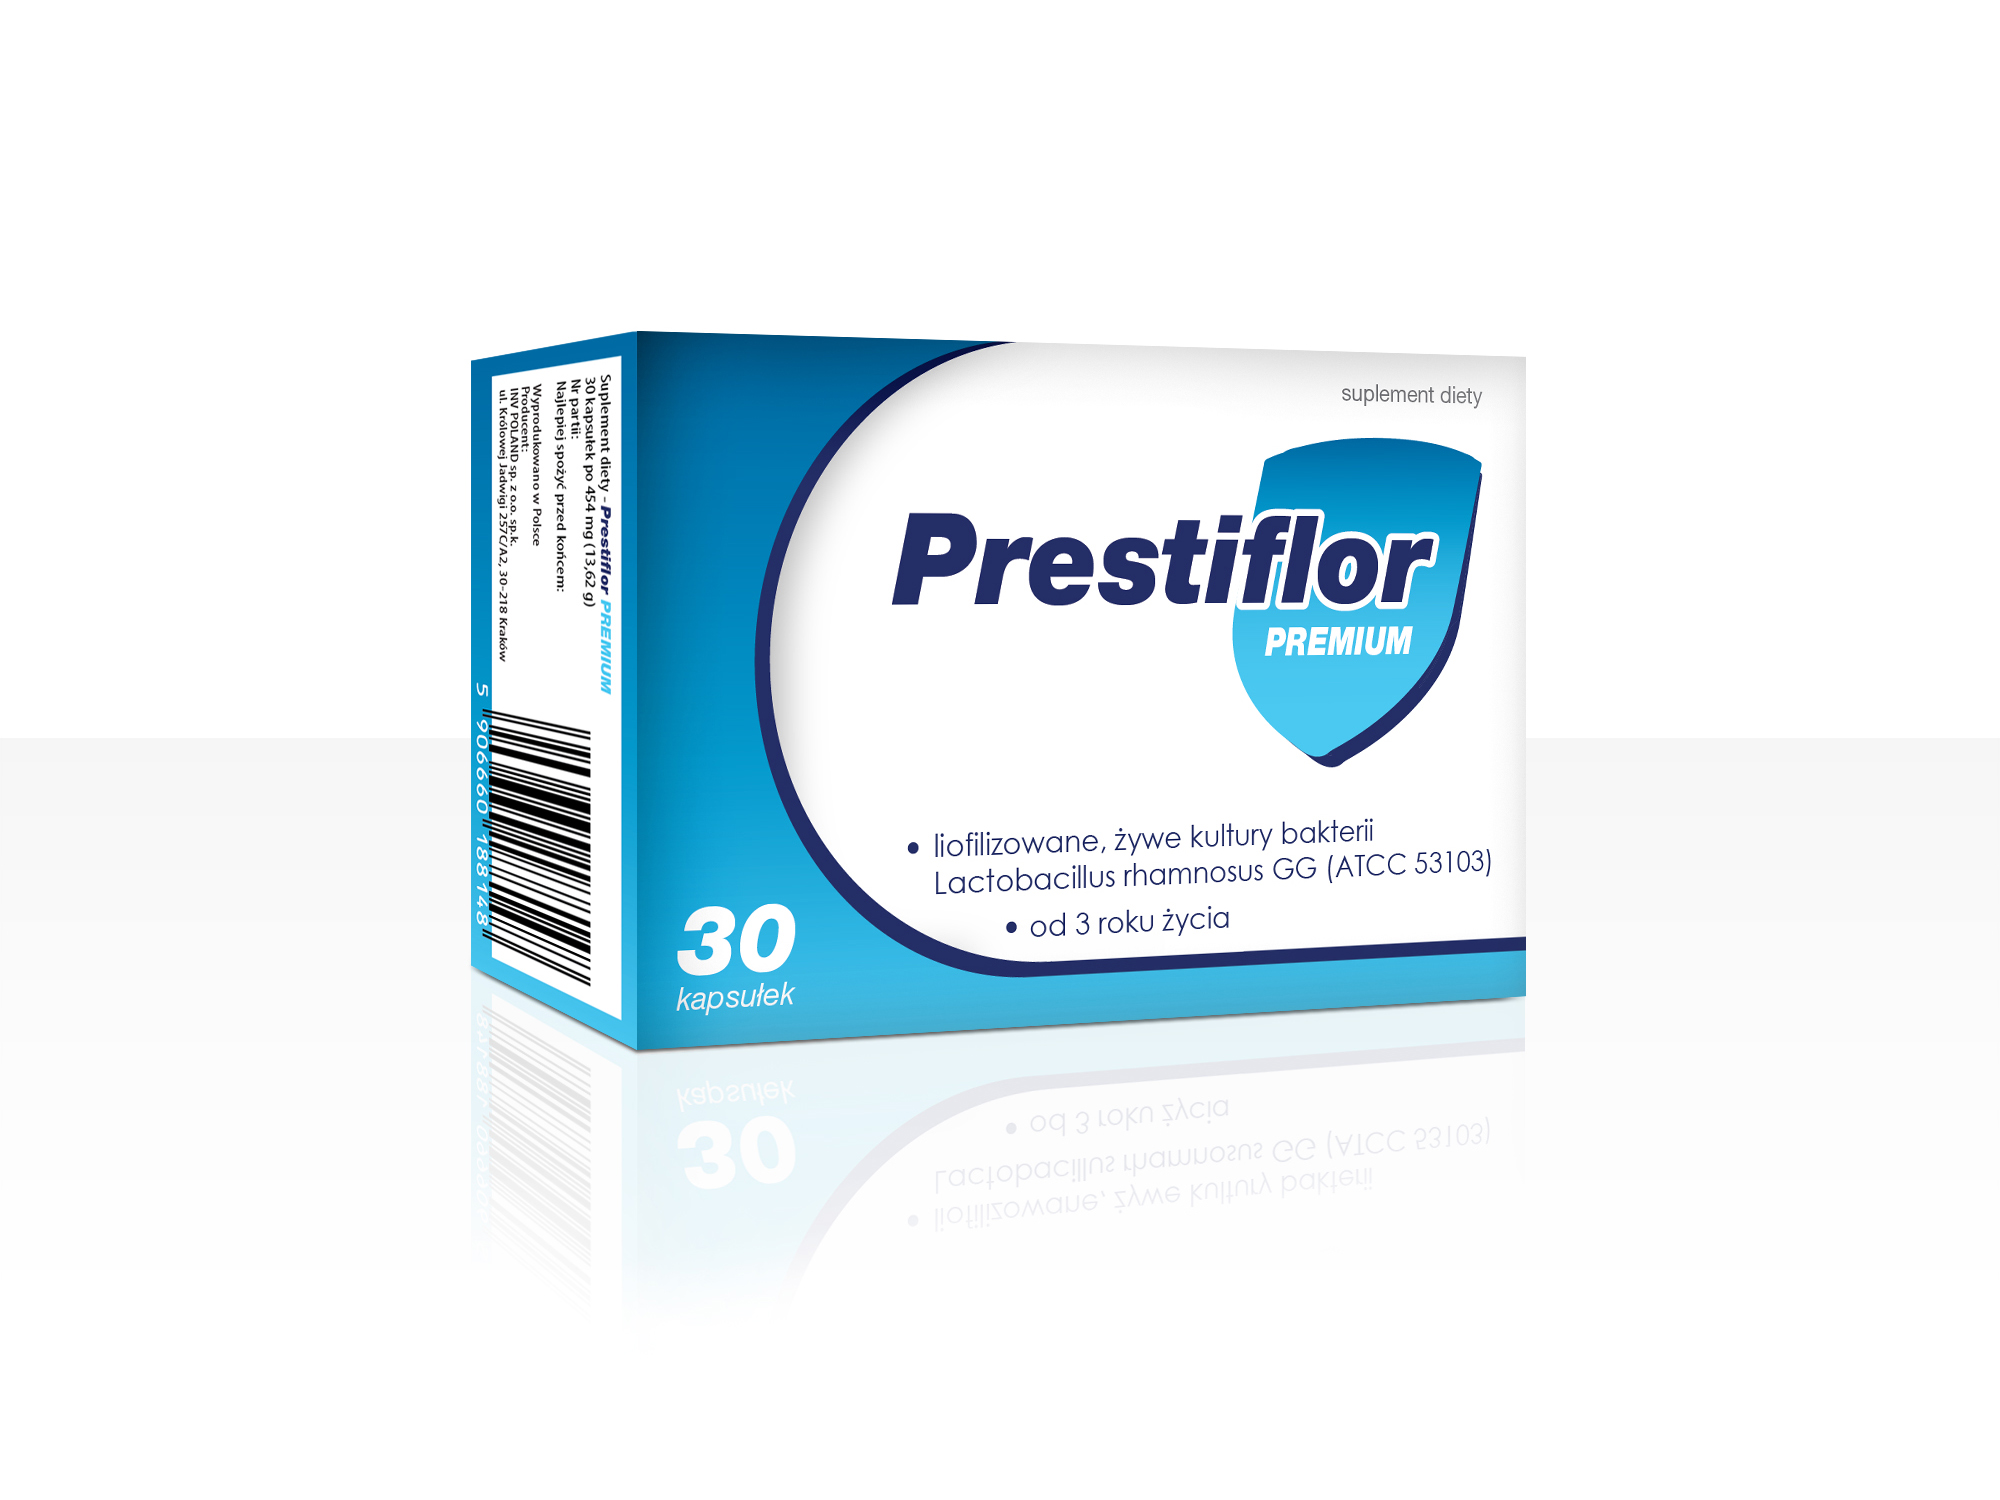 Prestiflor Premium - liofilizowane, żywe kultury bakterii Lactobacillus rhamnosus GG